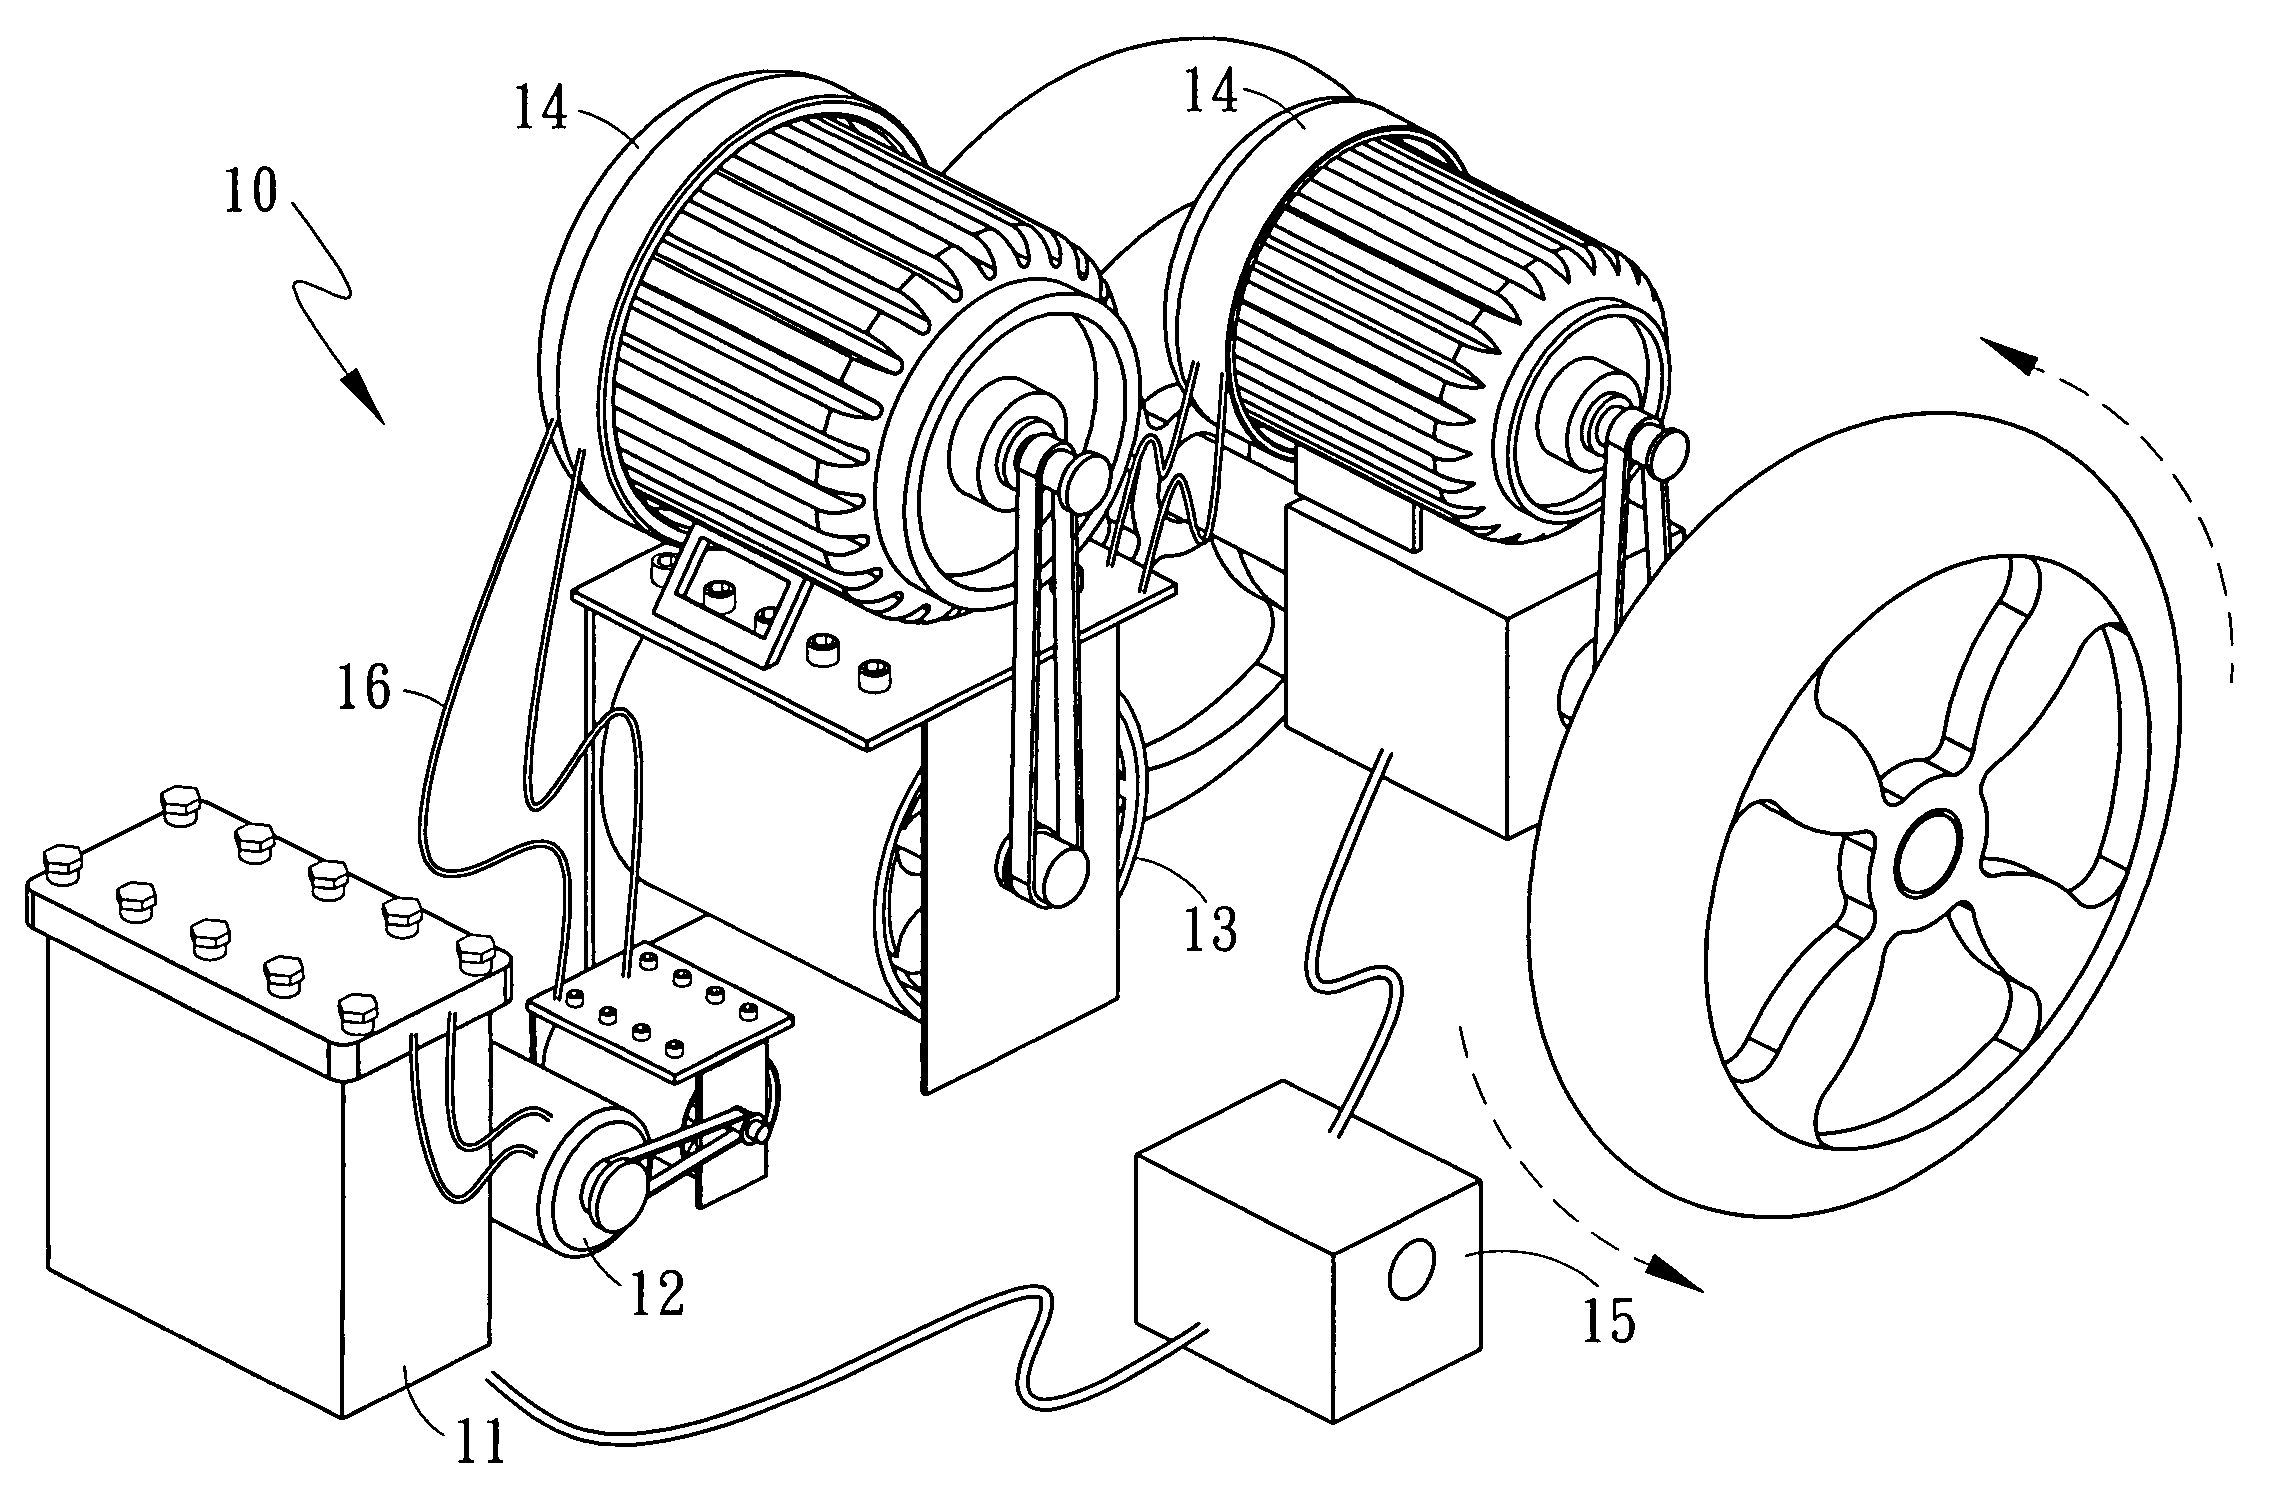 AC power driving apparatus